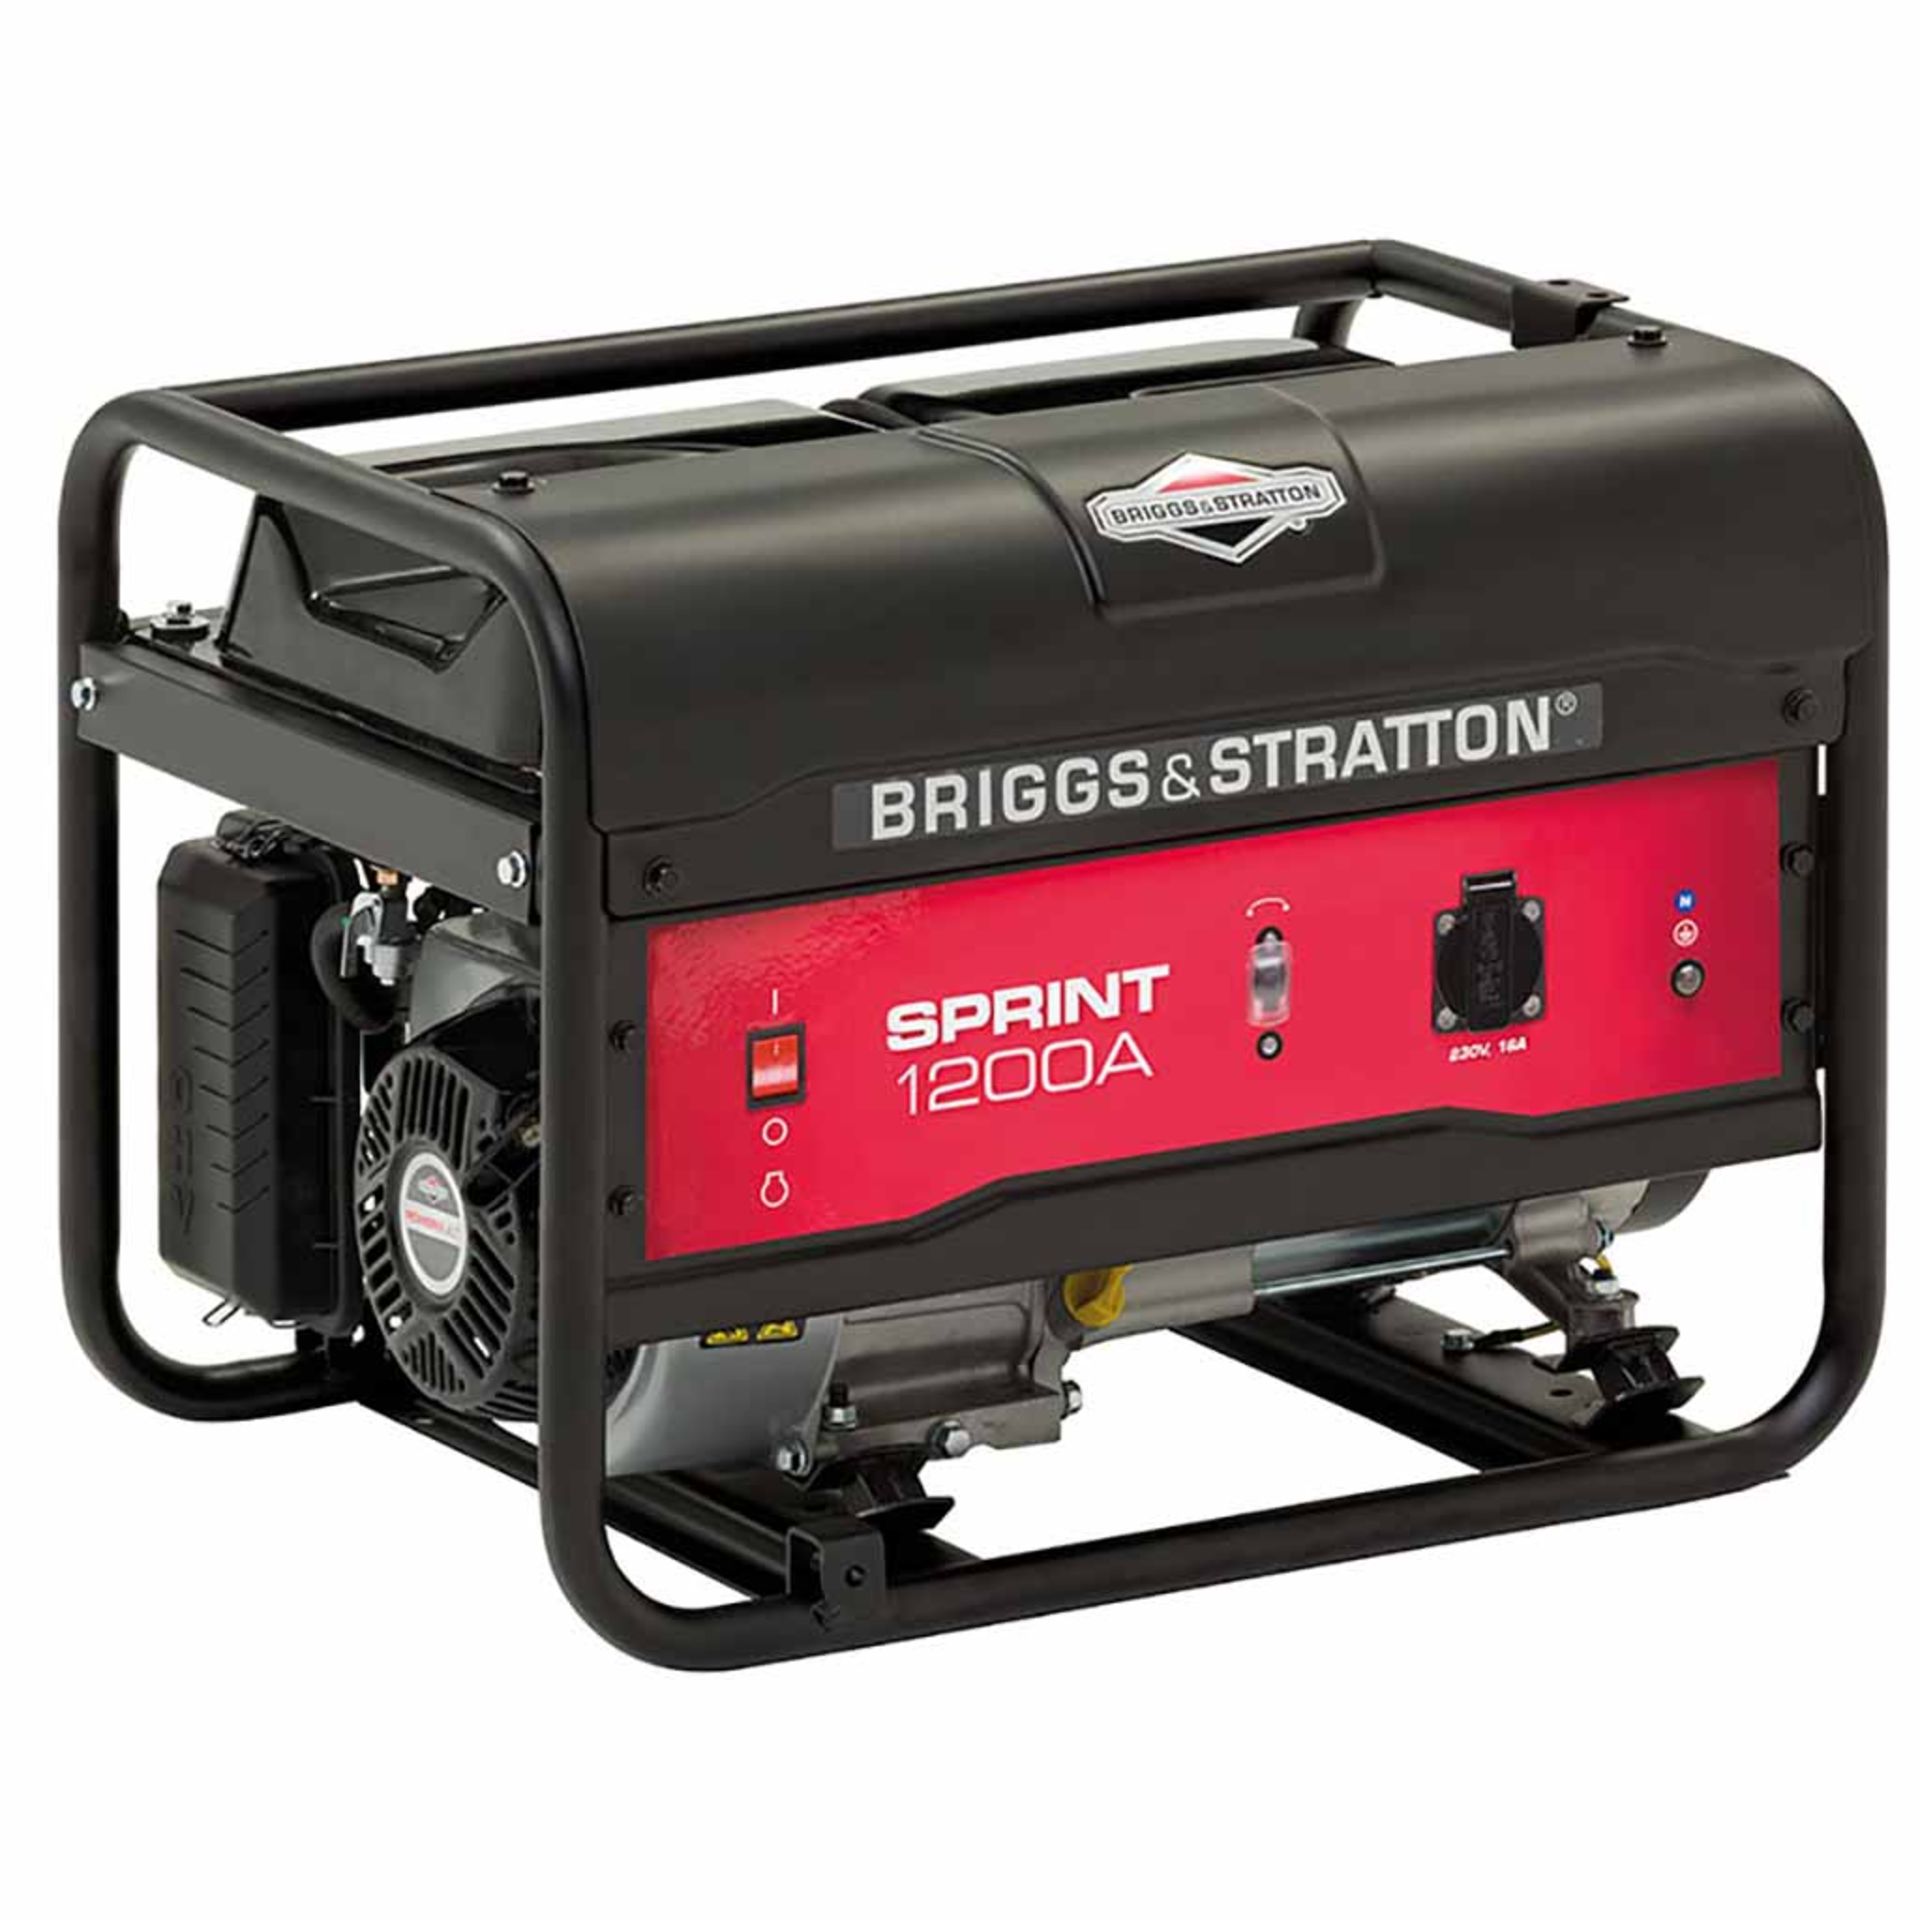 V Brand New Briggs & Stratton Sprint 1200a Generator ISP £330 (Ebay) 219 (Amazon)